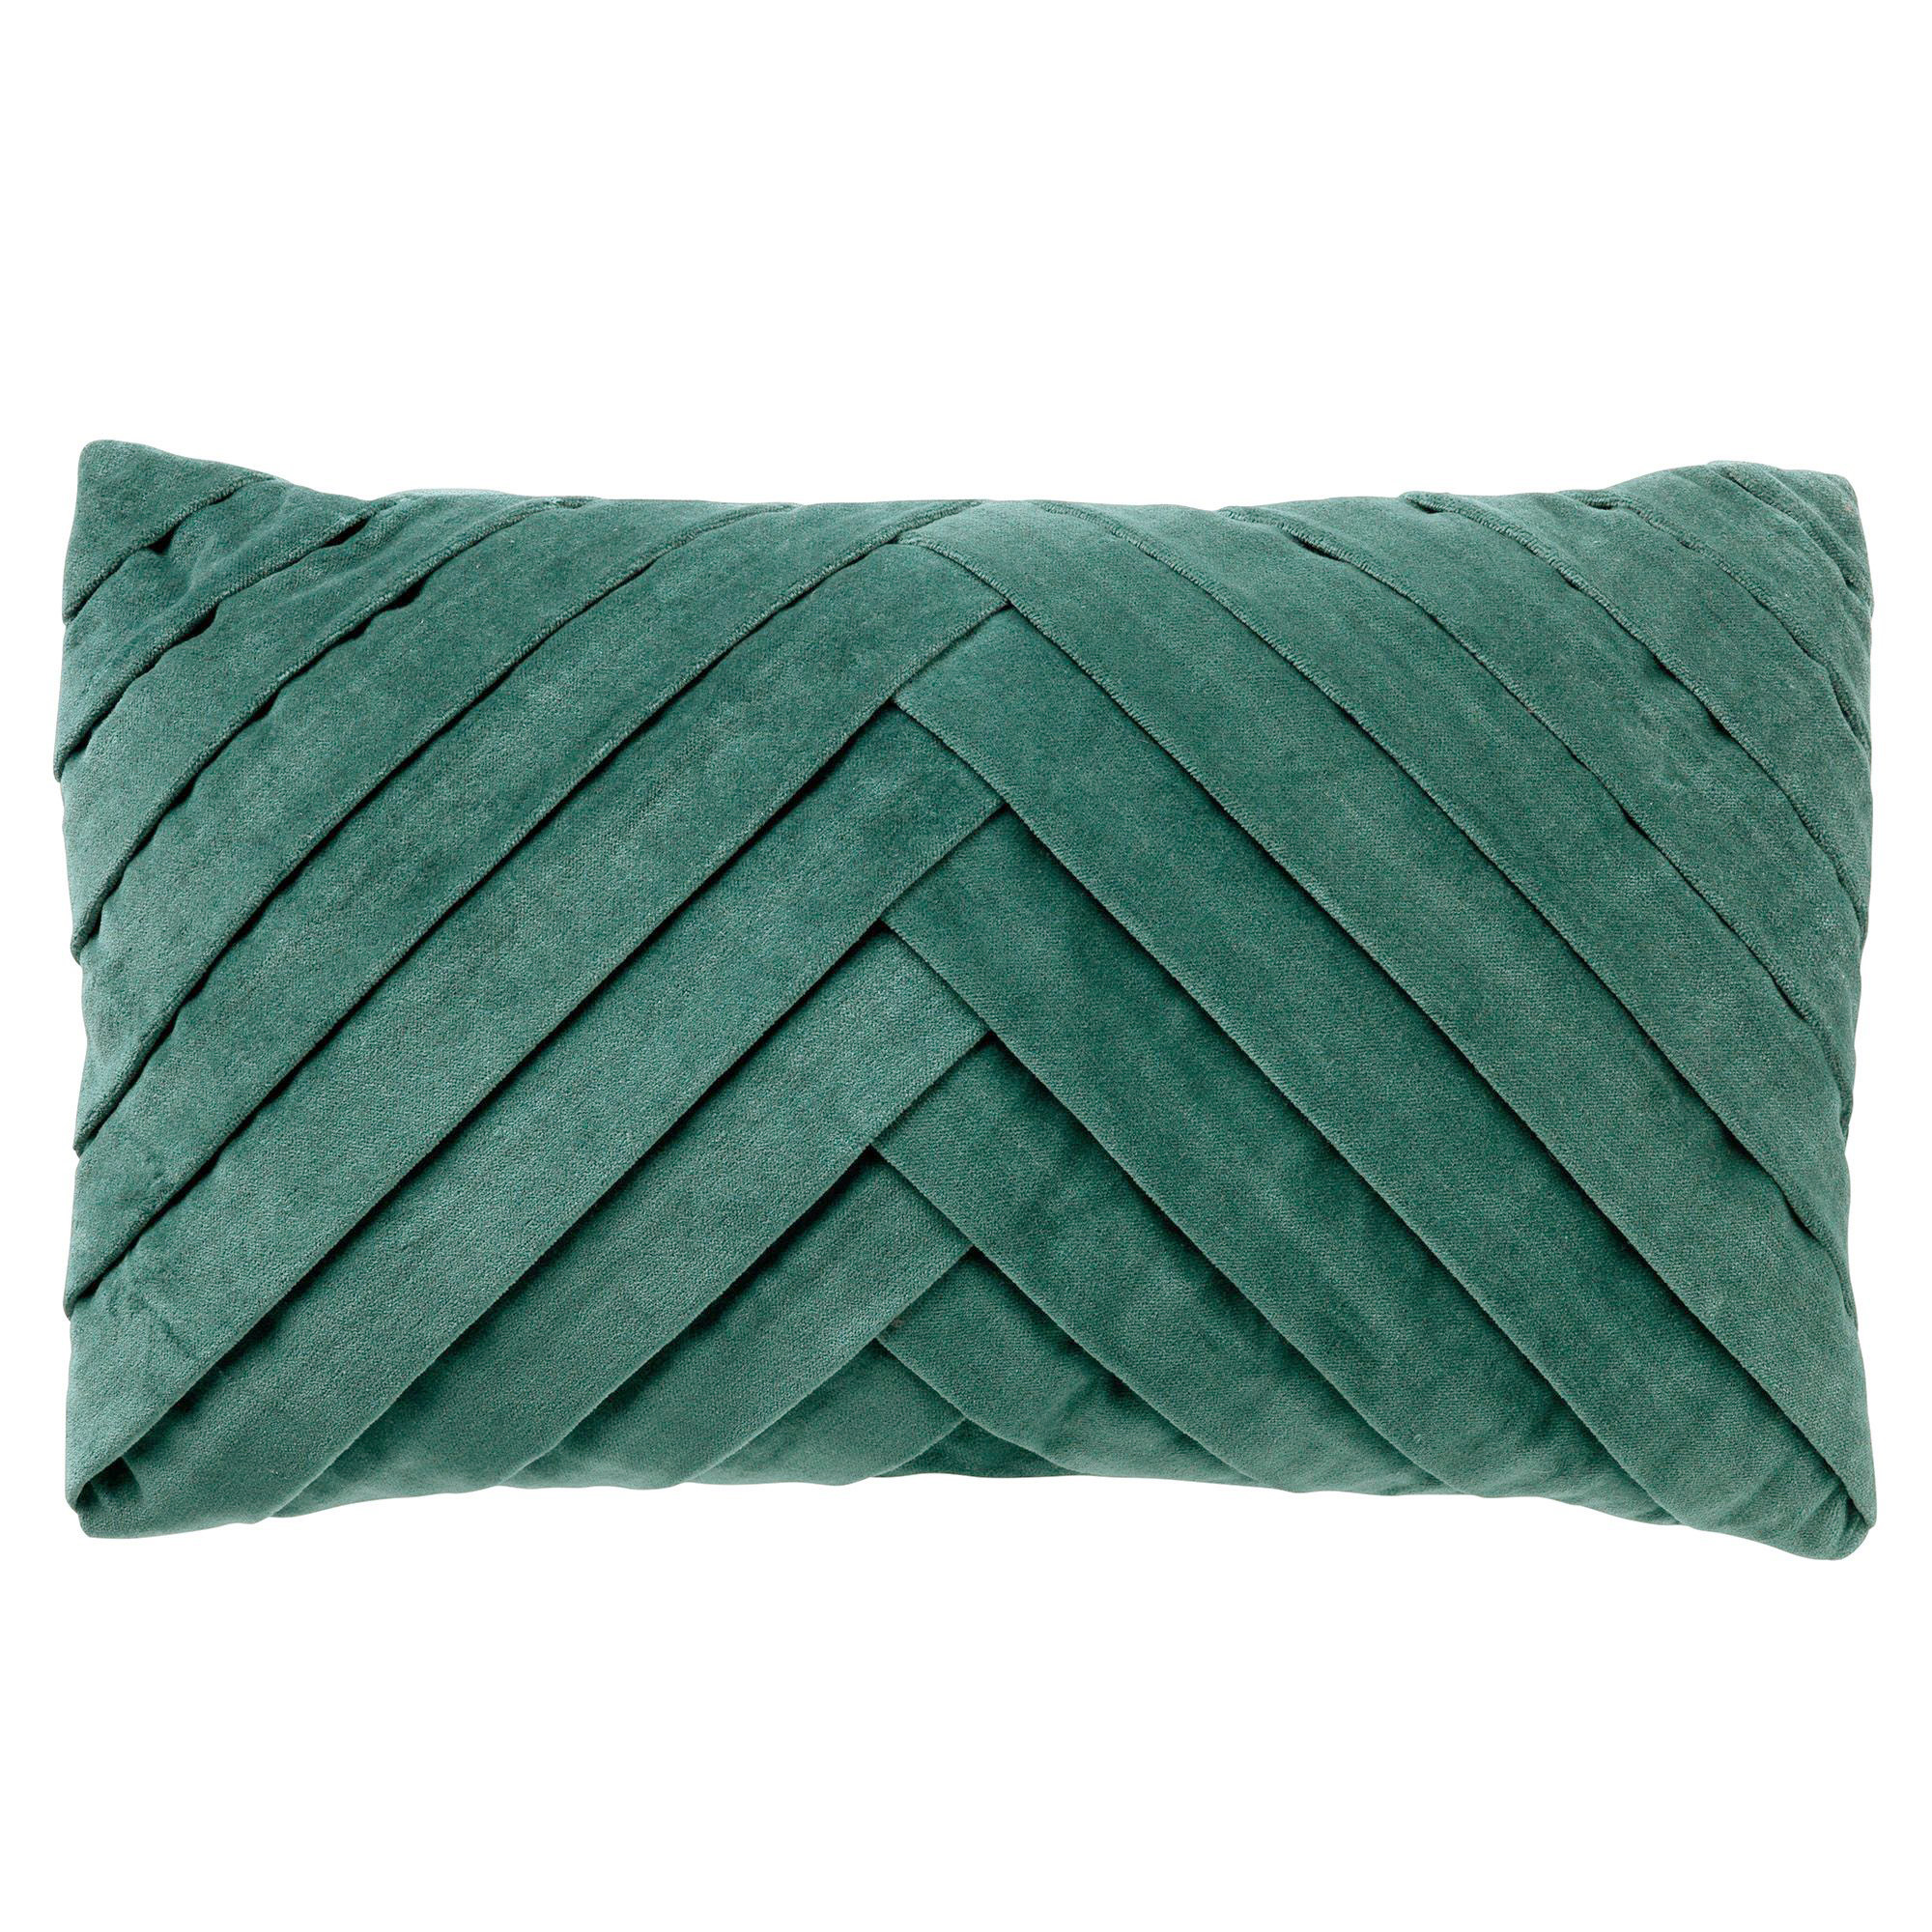 FEMM - Cushion 30x50 cm Sagebrush Green - green